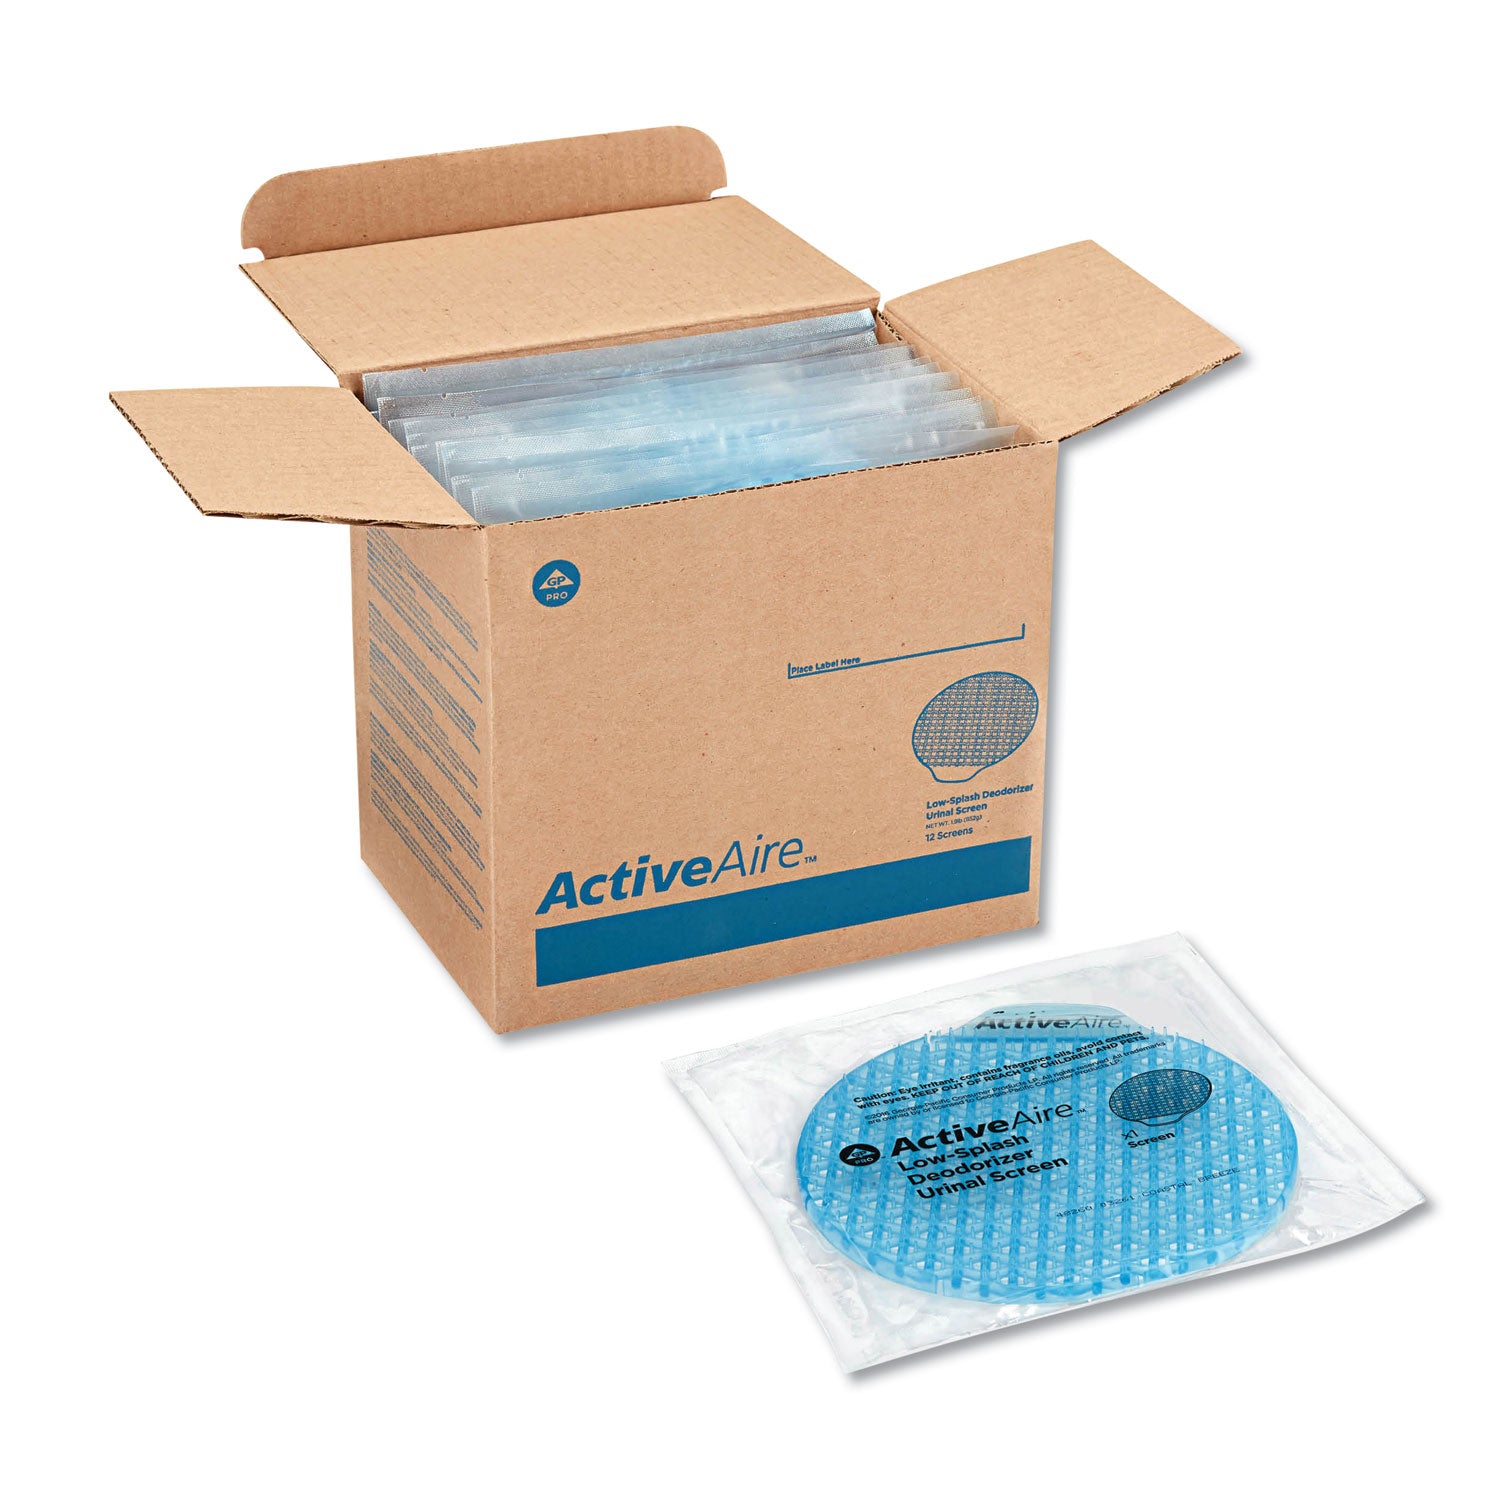 activeaire-deodorizer-urinal-screen-with-side-tab-coastal-breeze-scent-blue-12-carton_gpc48260 - 1